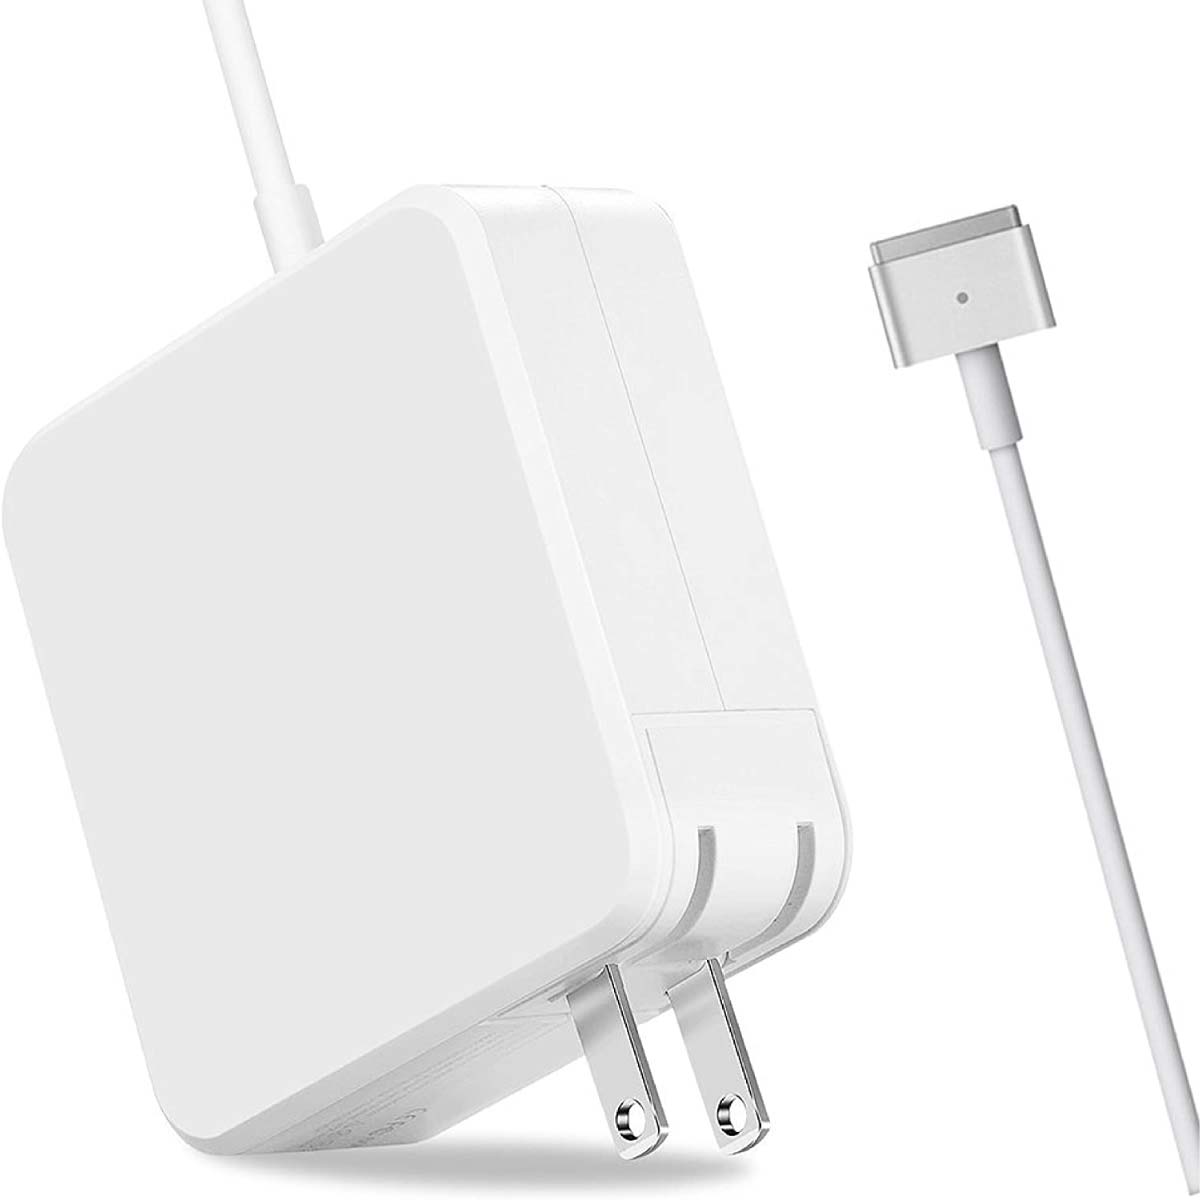 apple macbook air power cord